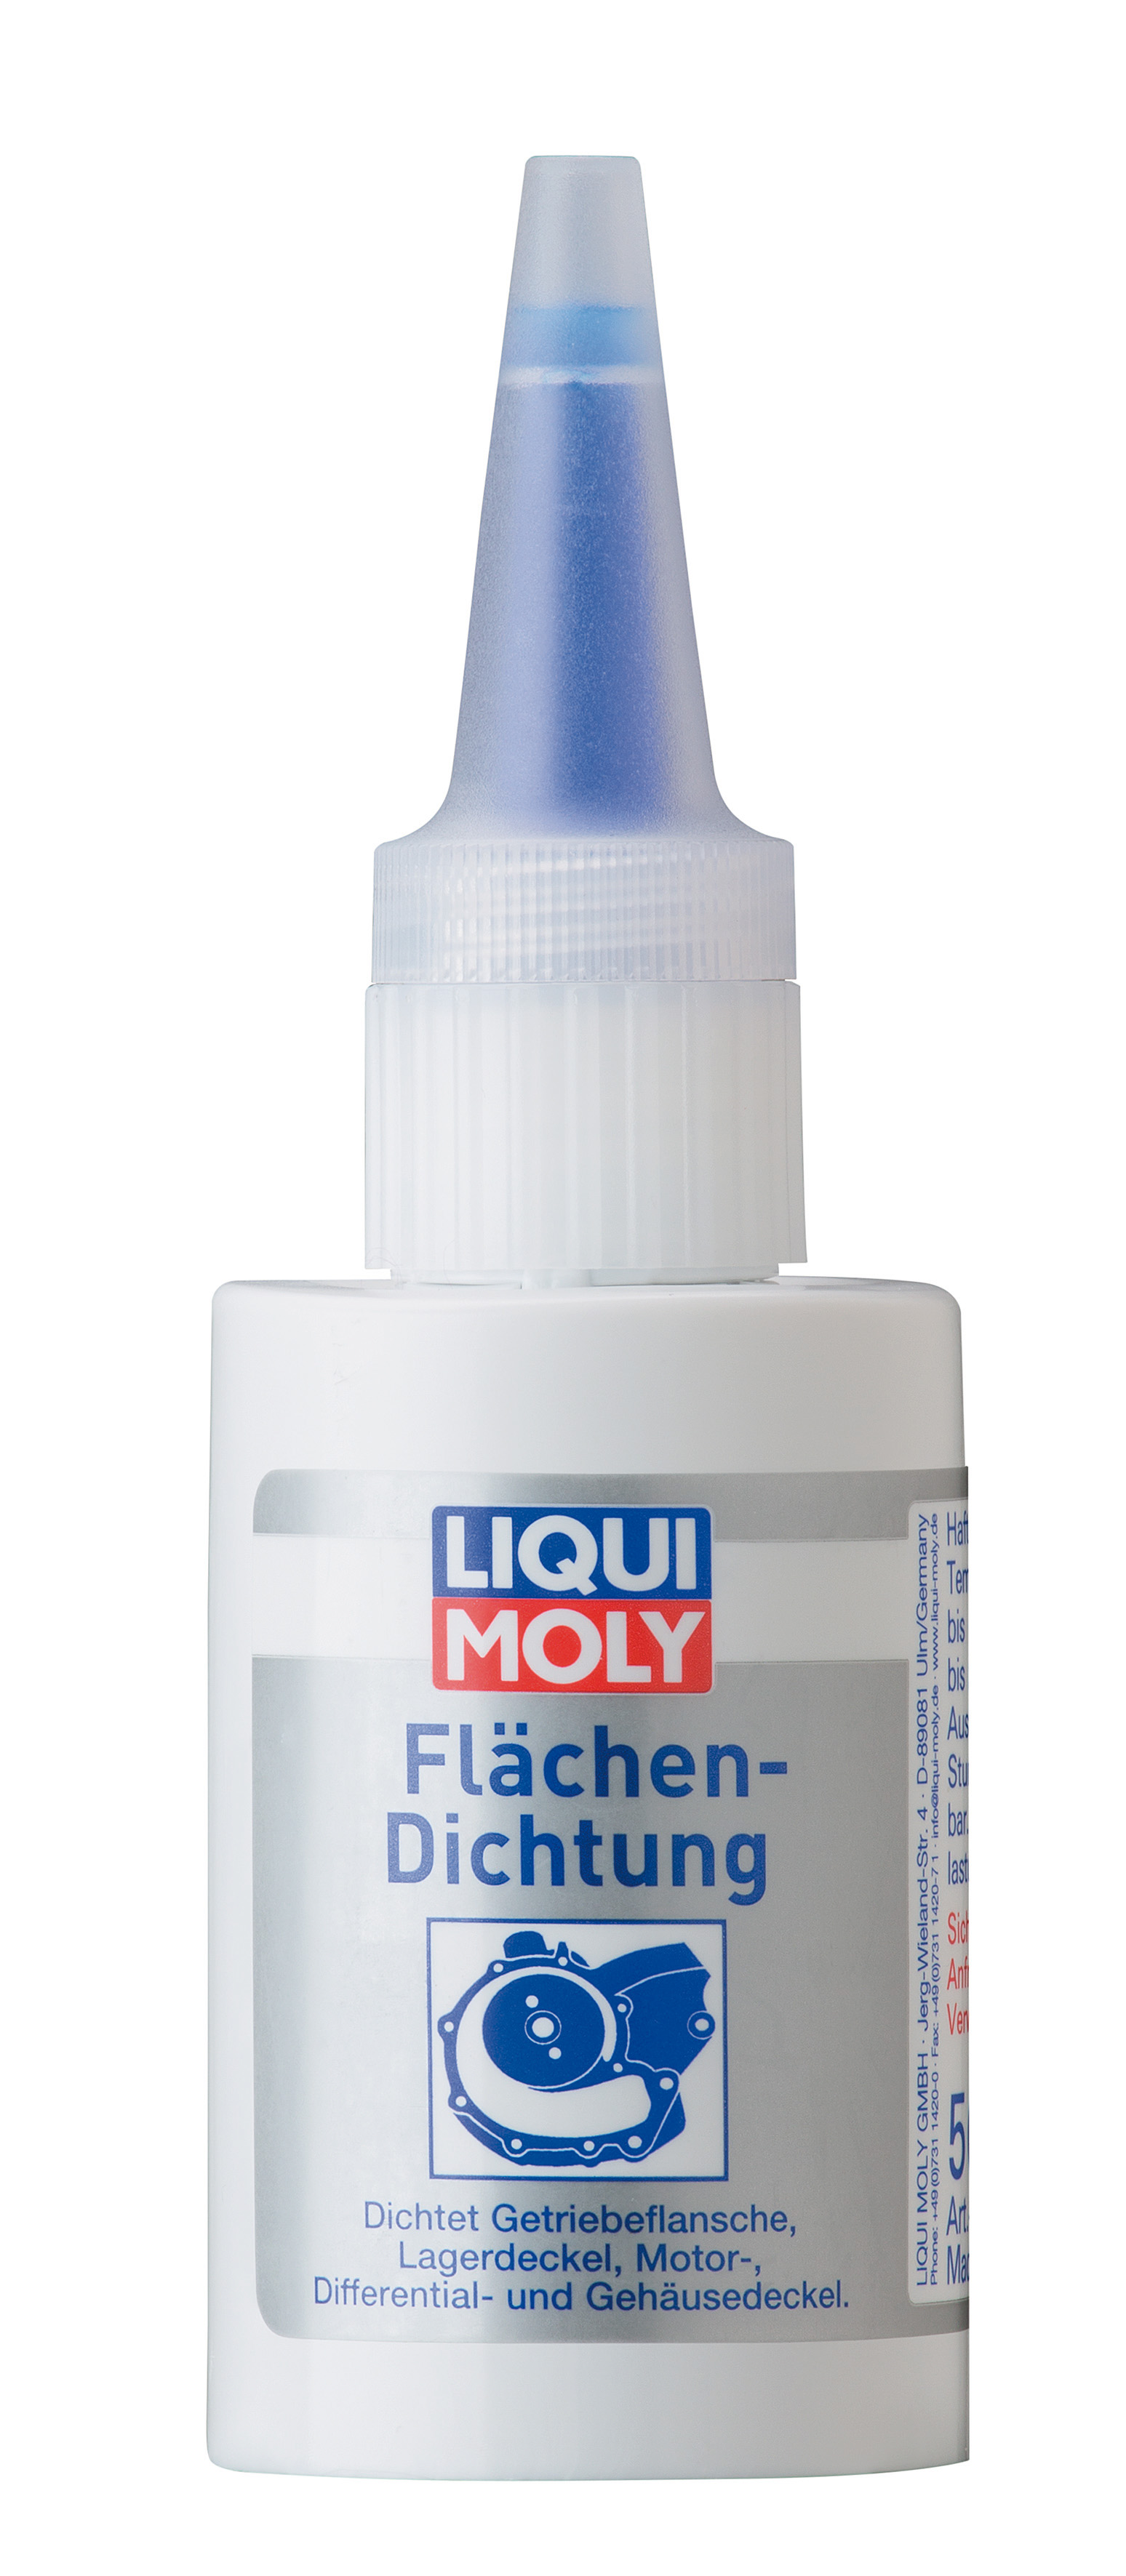 LIQUI MOLY Flachen-Dichtung Герметик фланцевых соединений